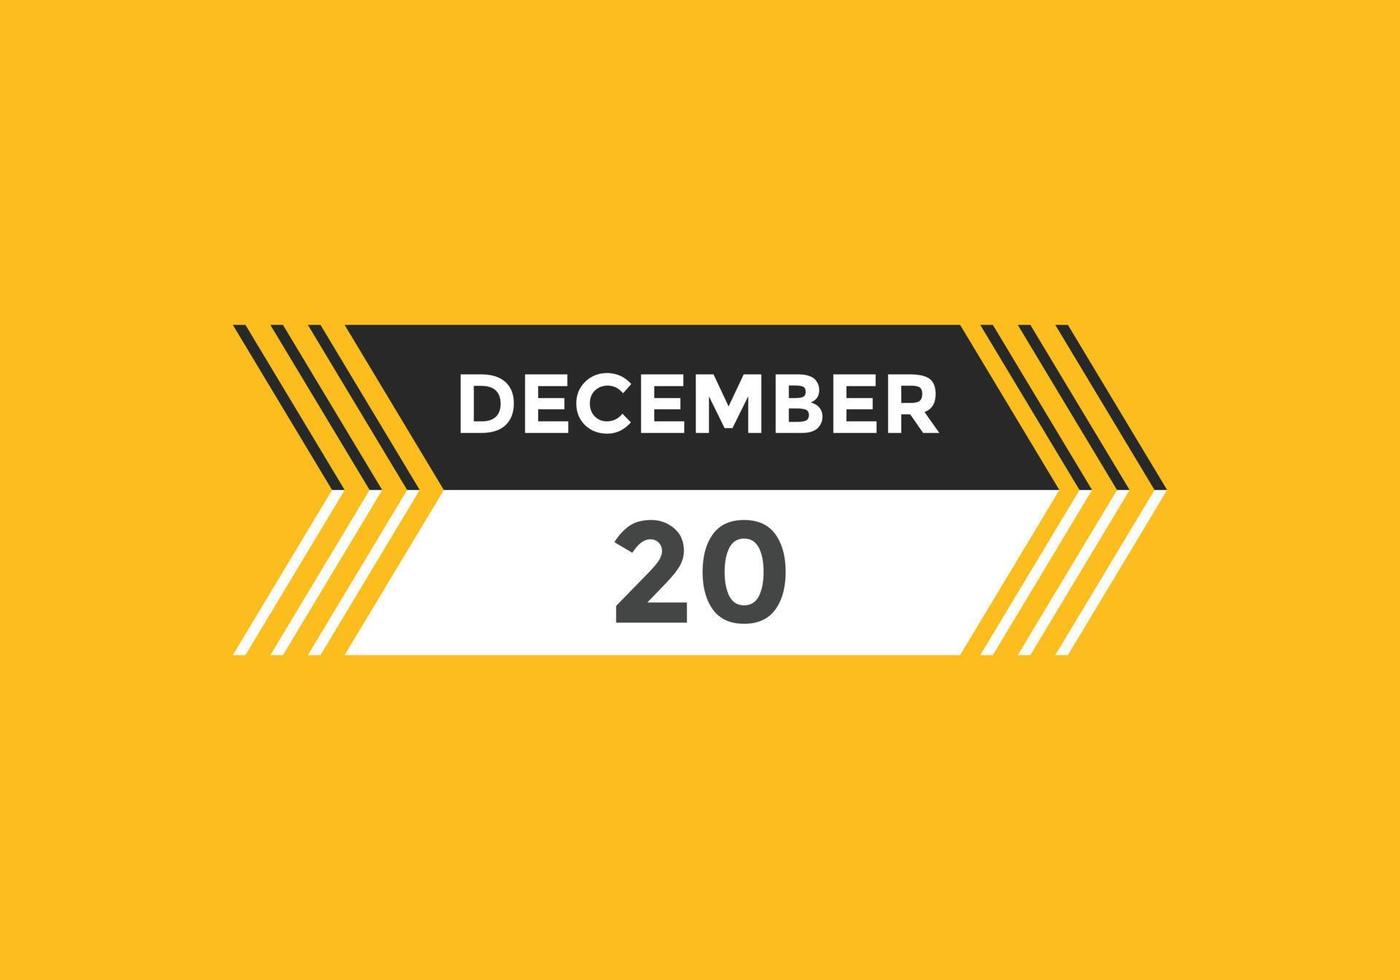 december 20 calendar reminder. 20th december daily calendar icon template. Calendar 20th december icon Design template. Vector illustration